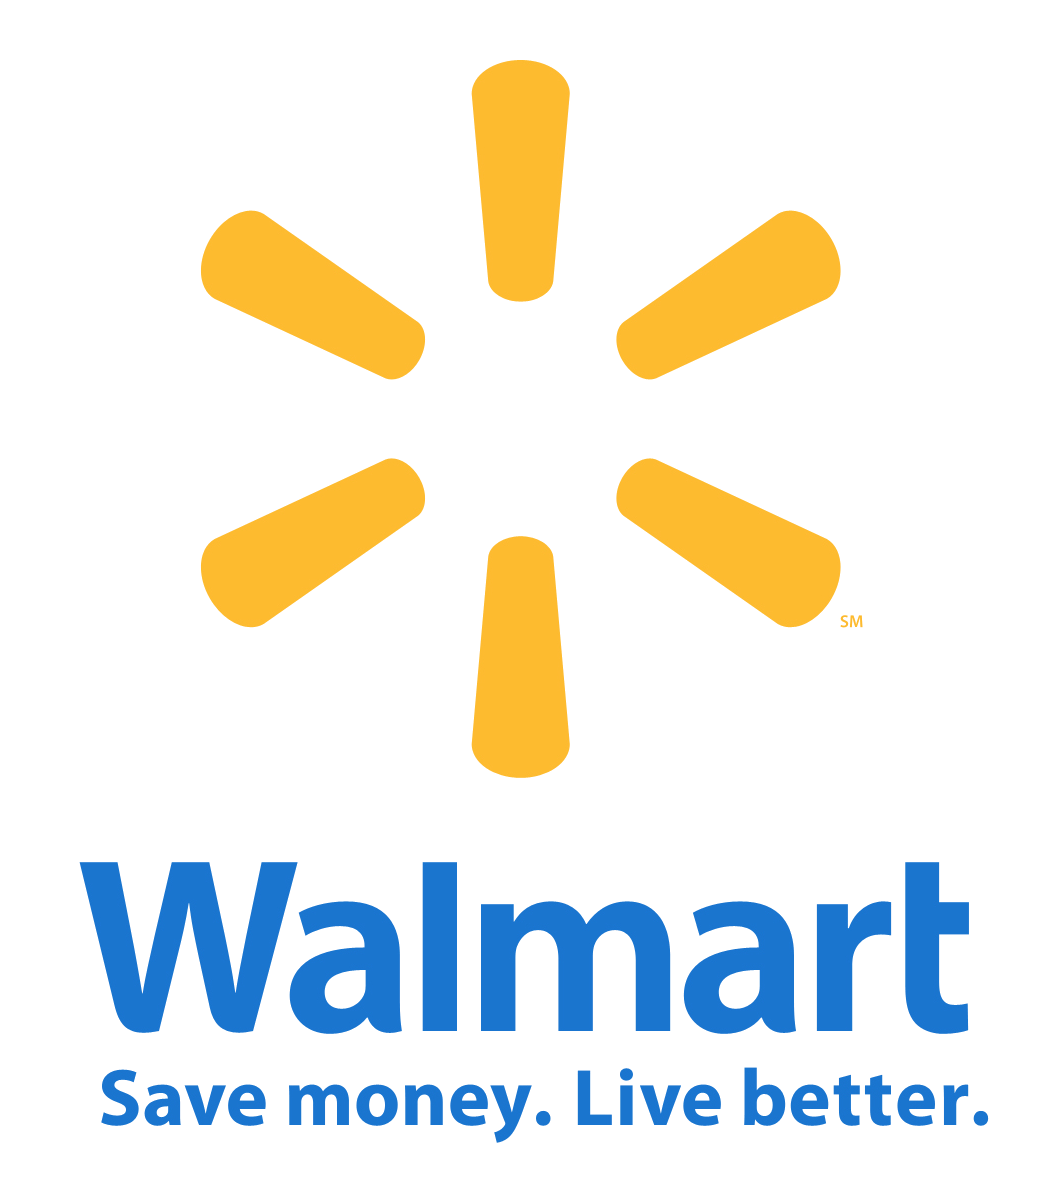 Vertical Logo - Walmart Vertical Logo PNG Image. Free transparent CC0 PNG